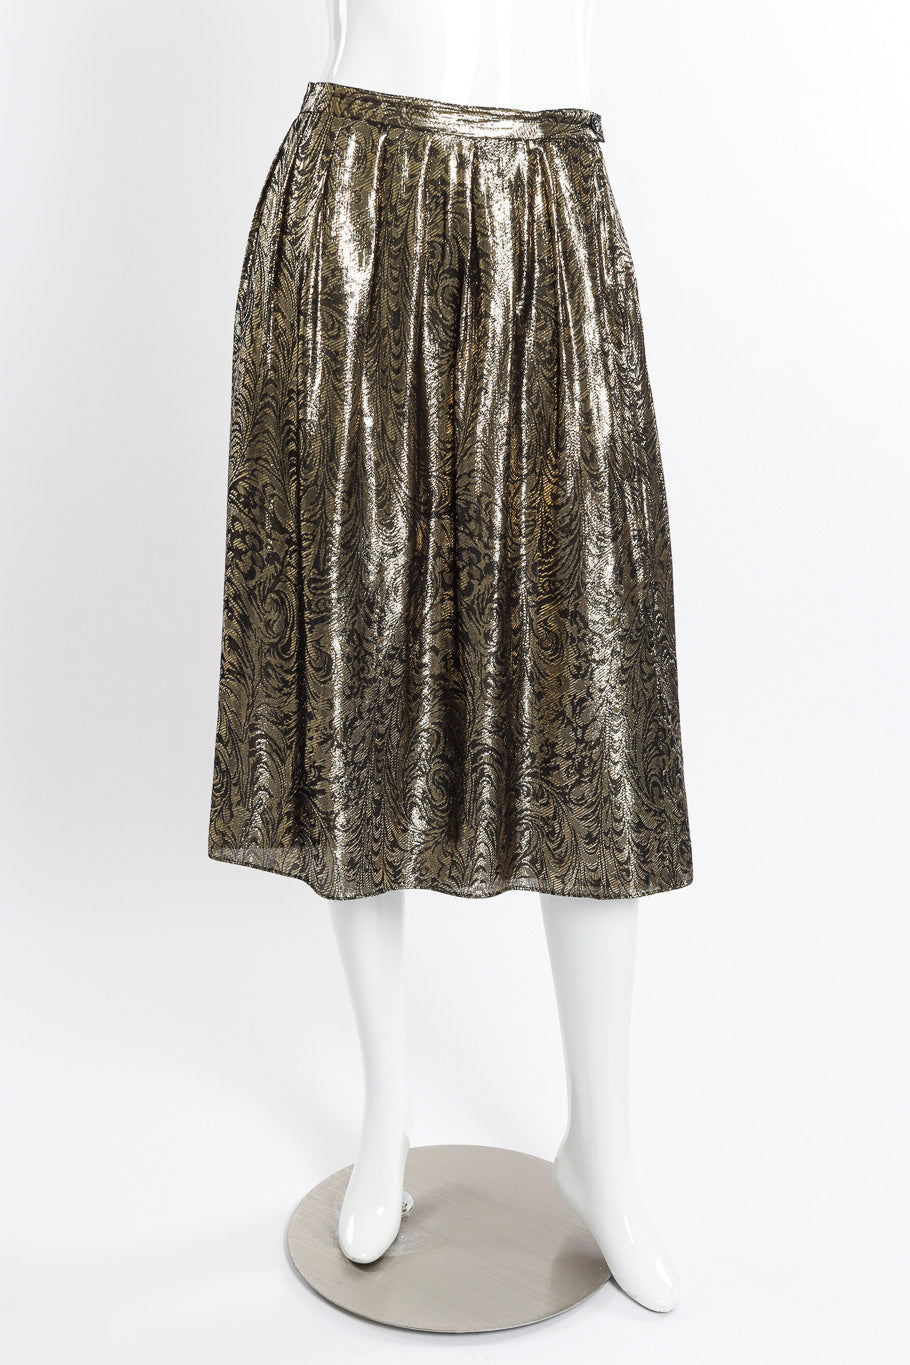 Vintage Nolan Miller Lamé Jacquard Blouse & Skirt Set skirt front on mannequin @recessla